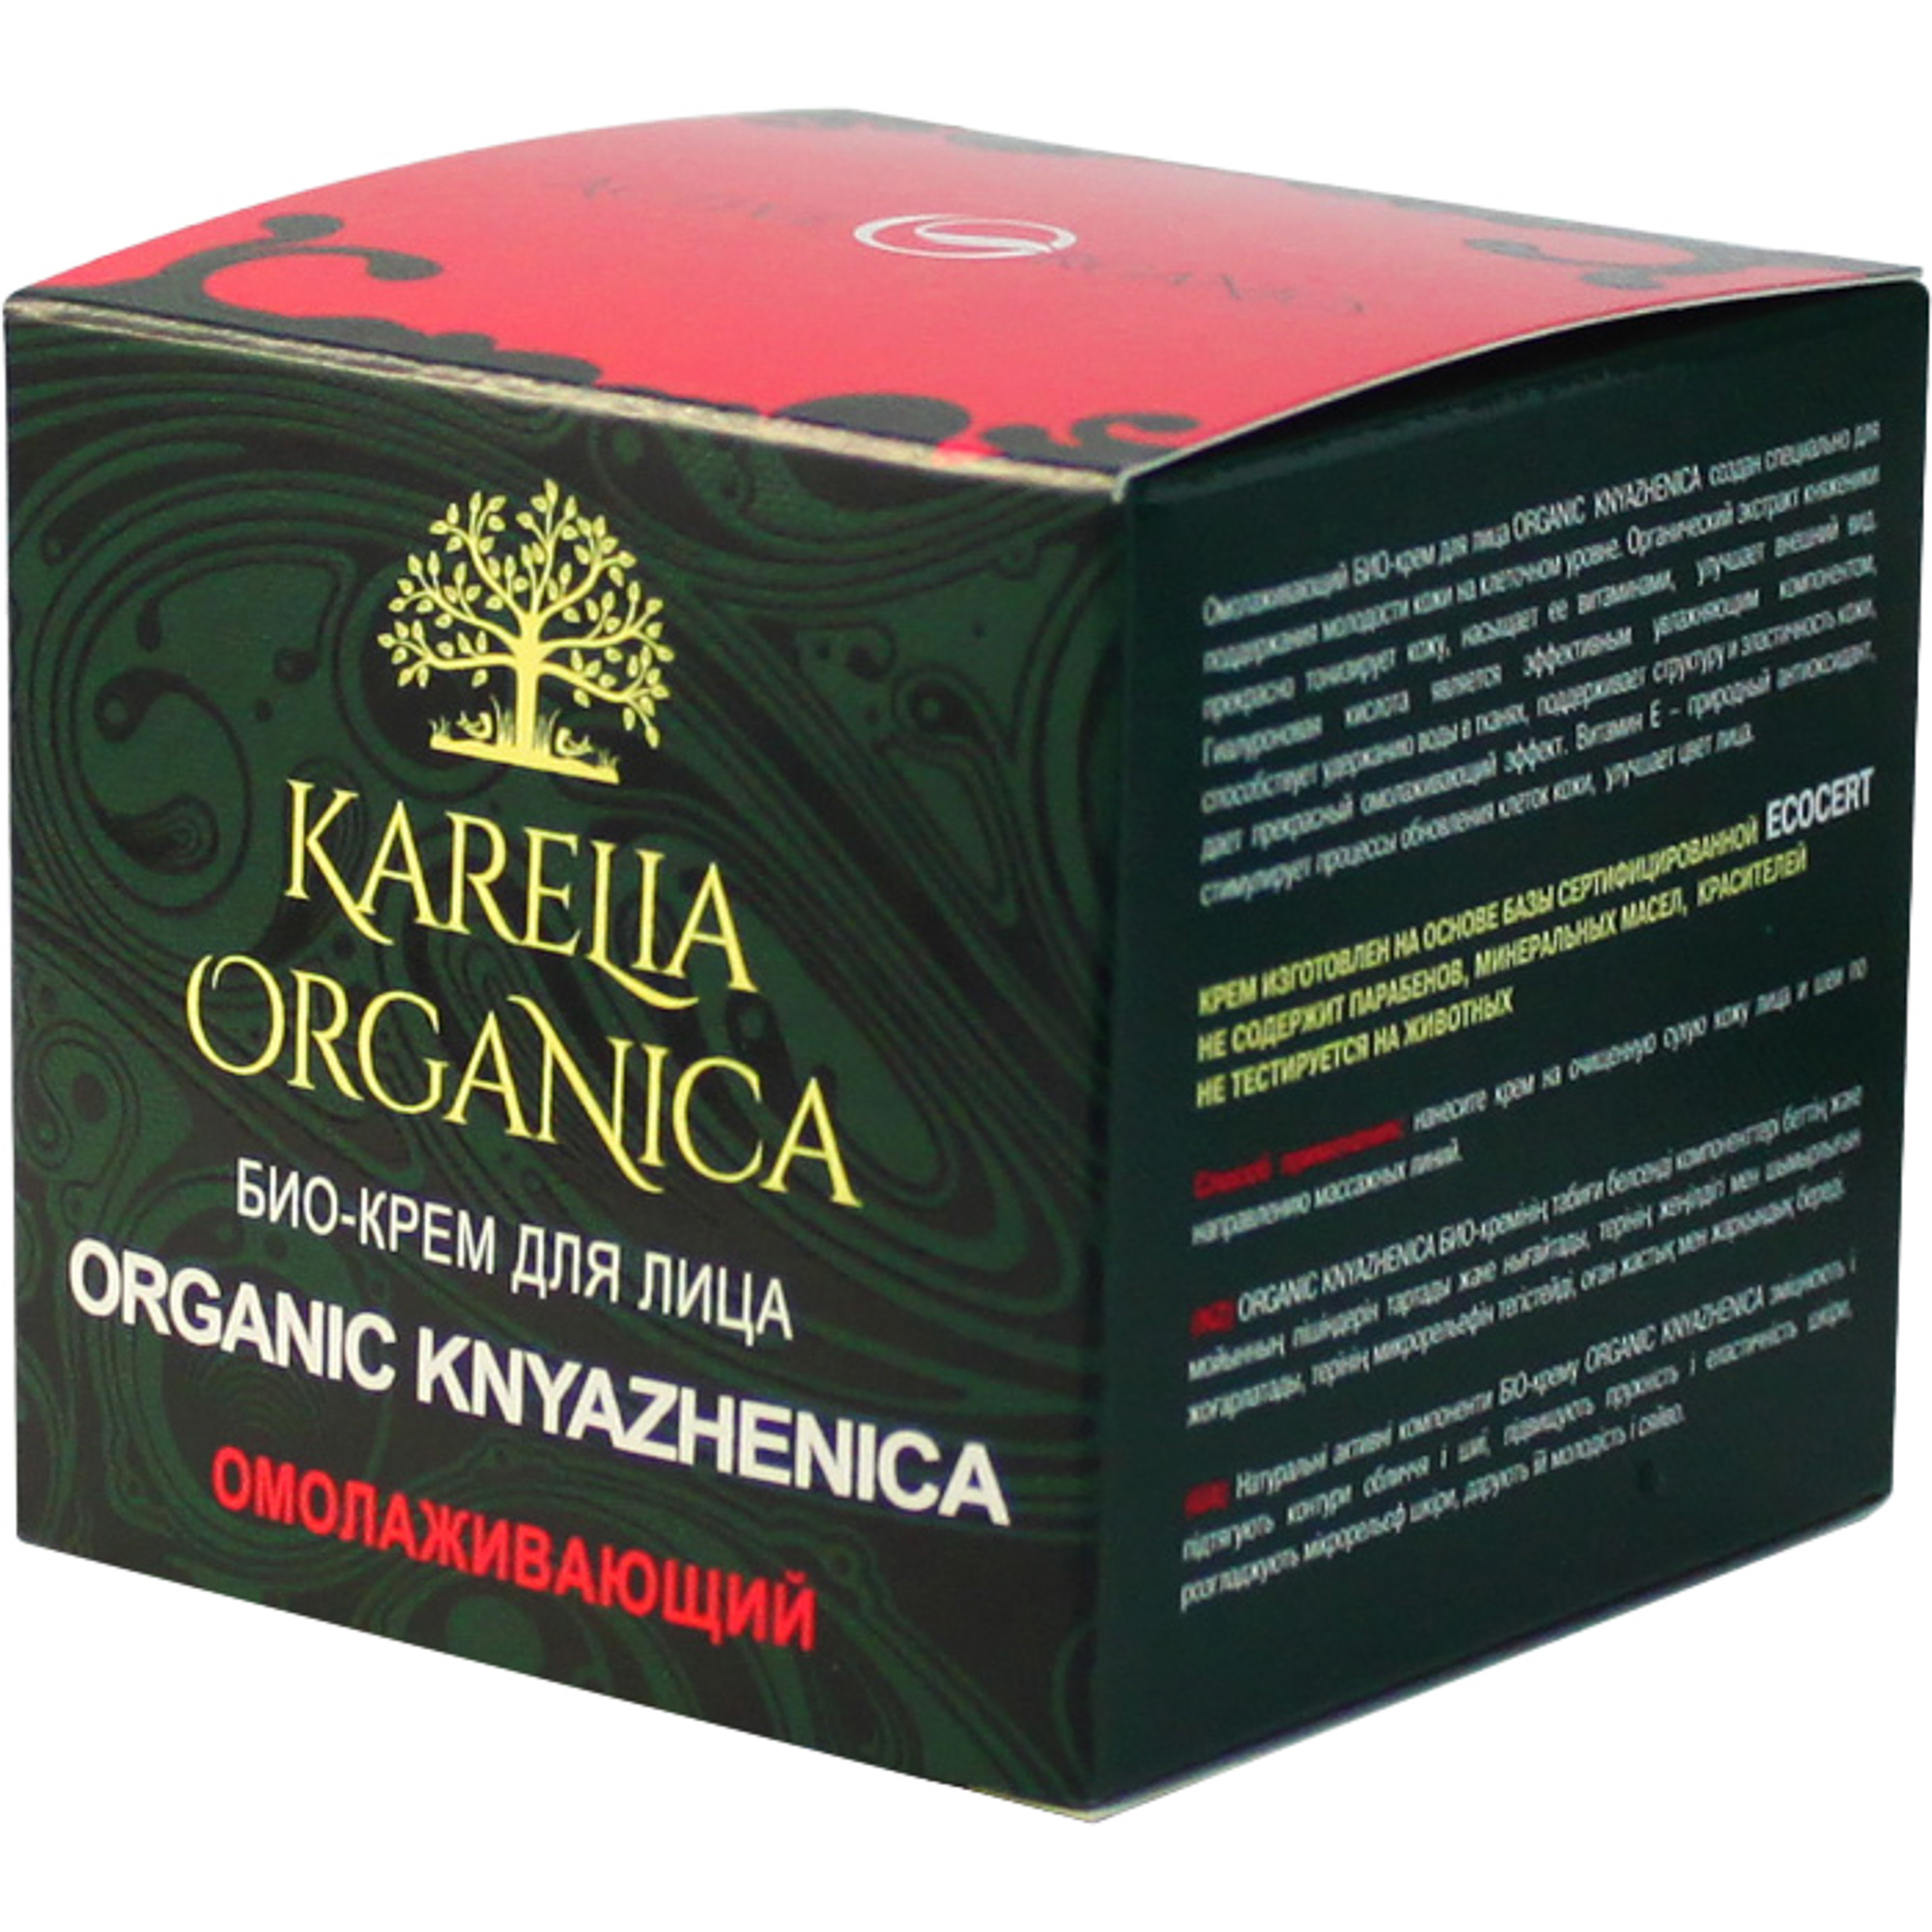 Крем для лица Фратти НВ Karelia Organica Organic Knyazhenica омолаживающий 50 мл, размер 6x6x6 см 420108 - фото 1